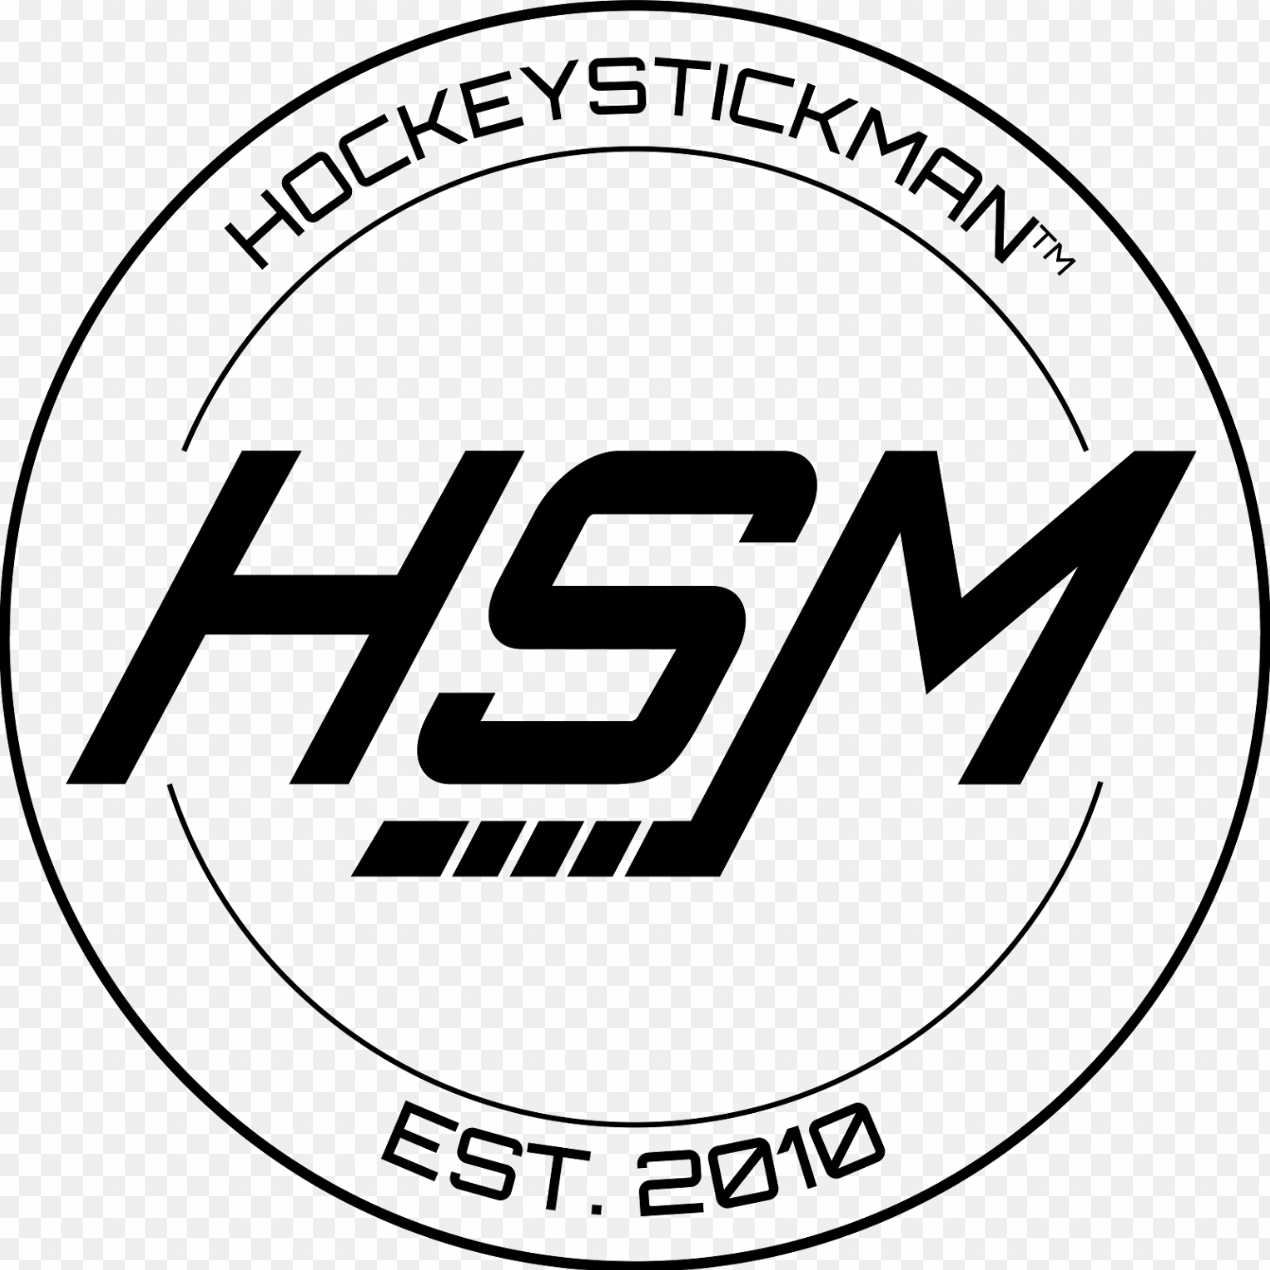 Hockey Stick Man